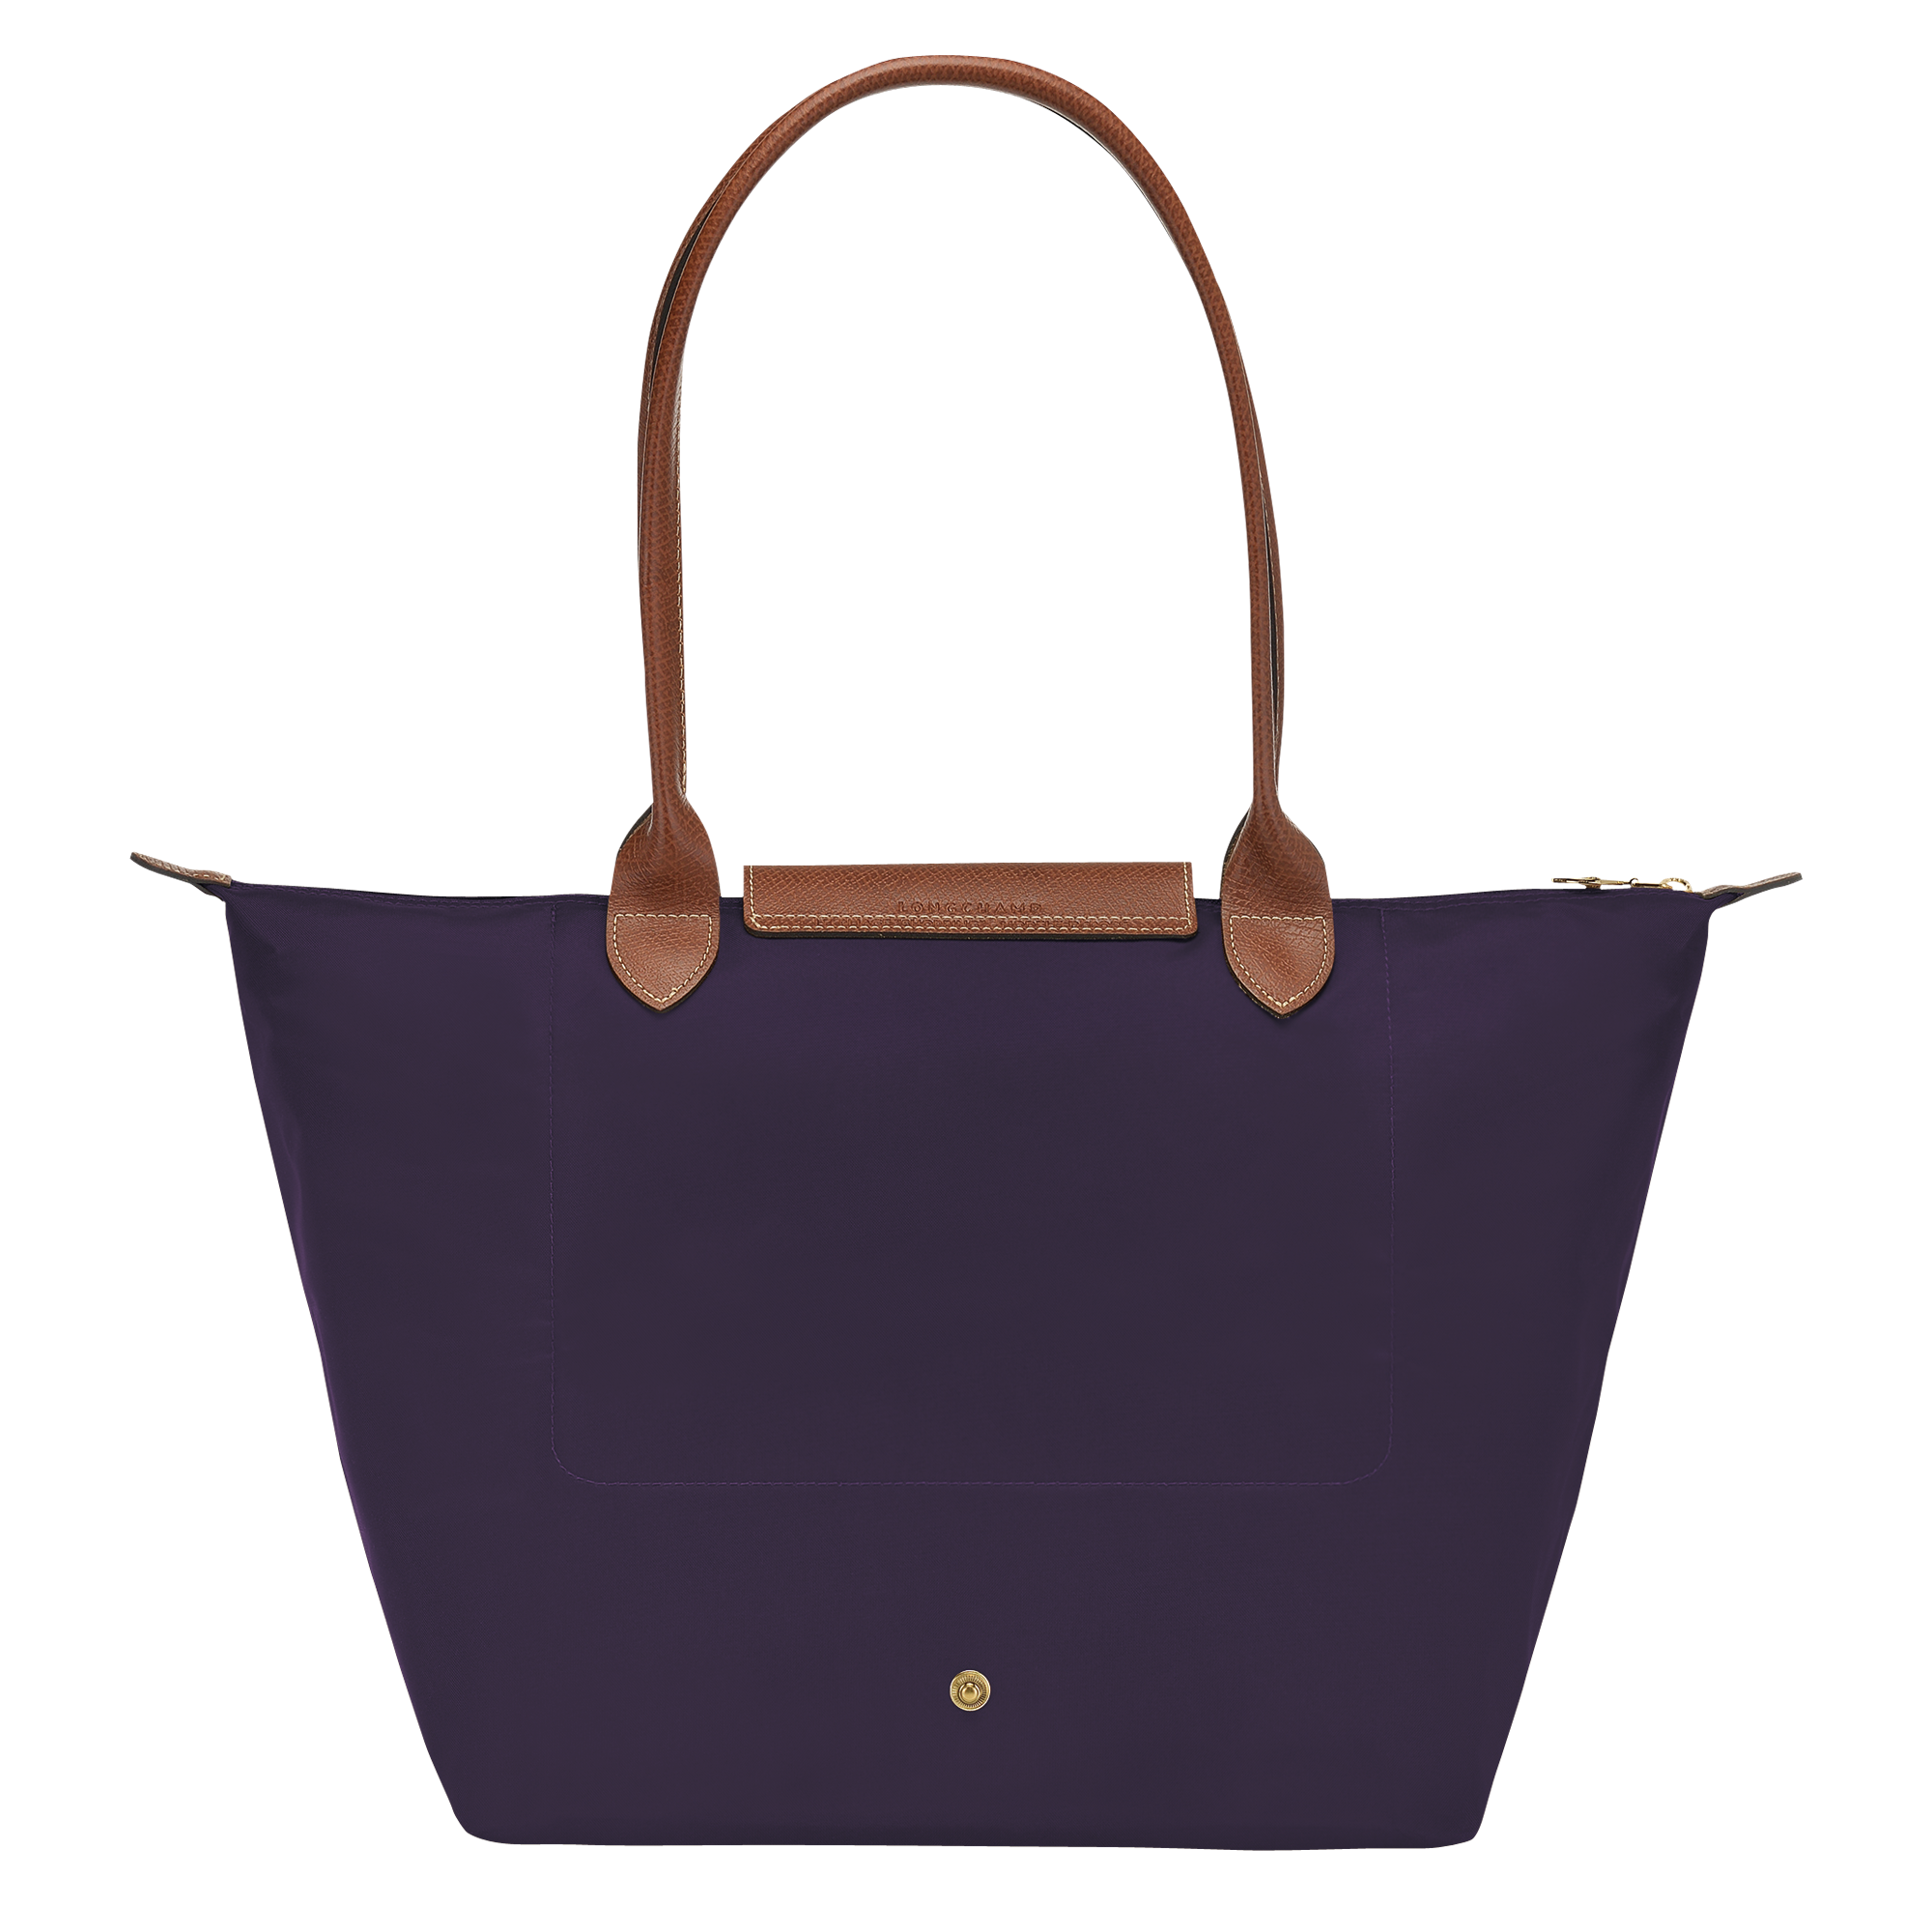 bilberry color longchamp bag